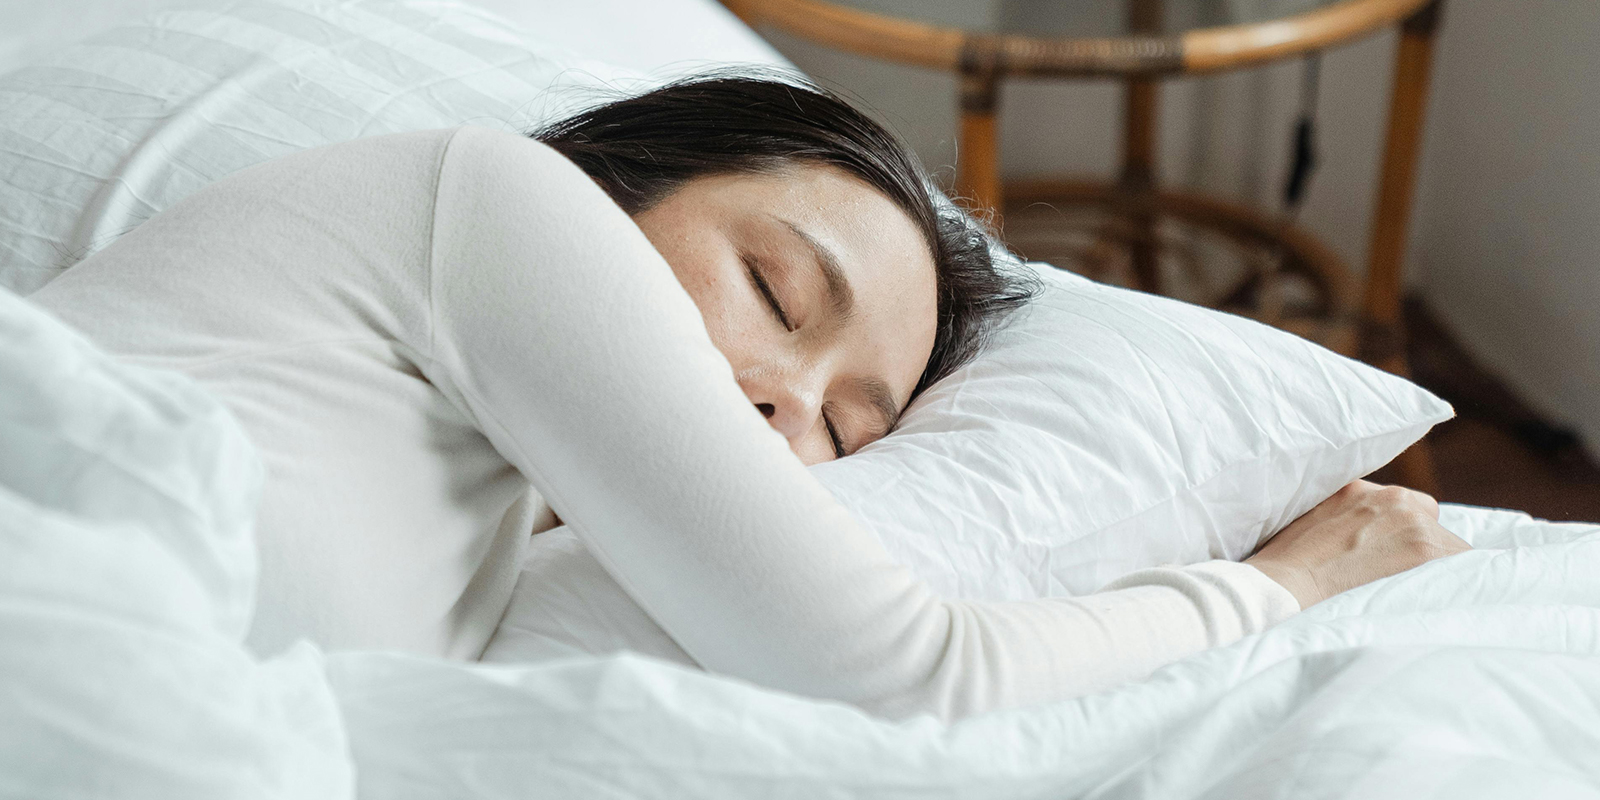 sleep affects women's health